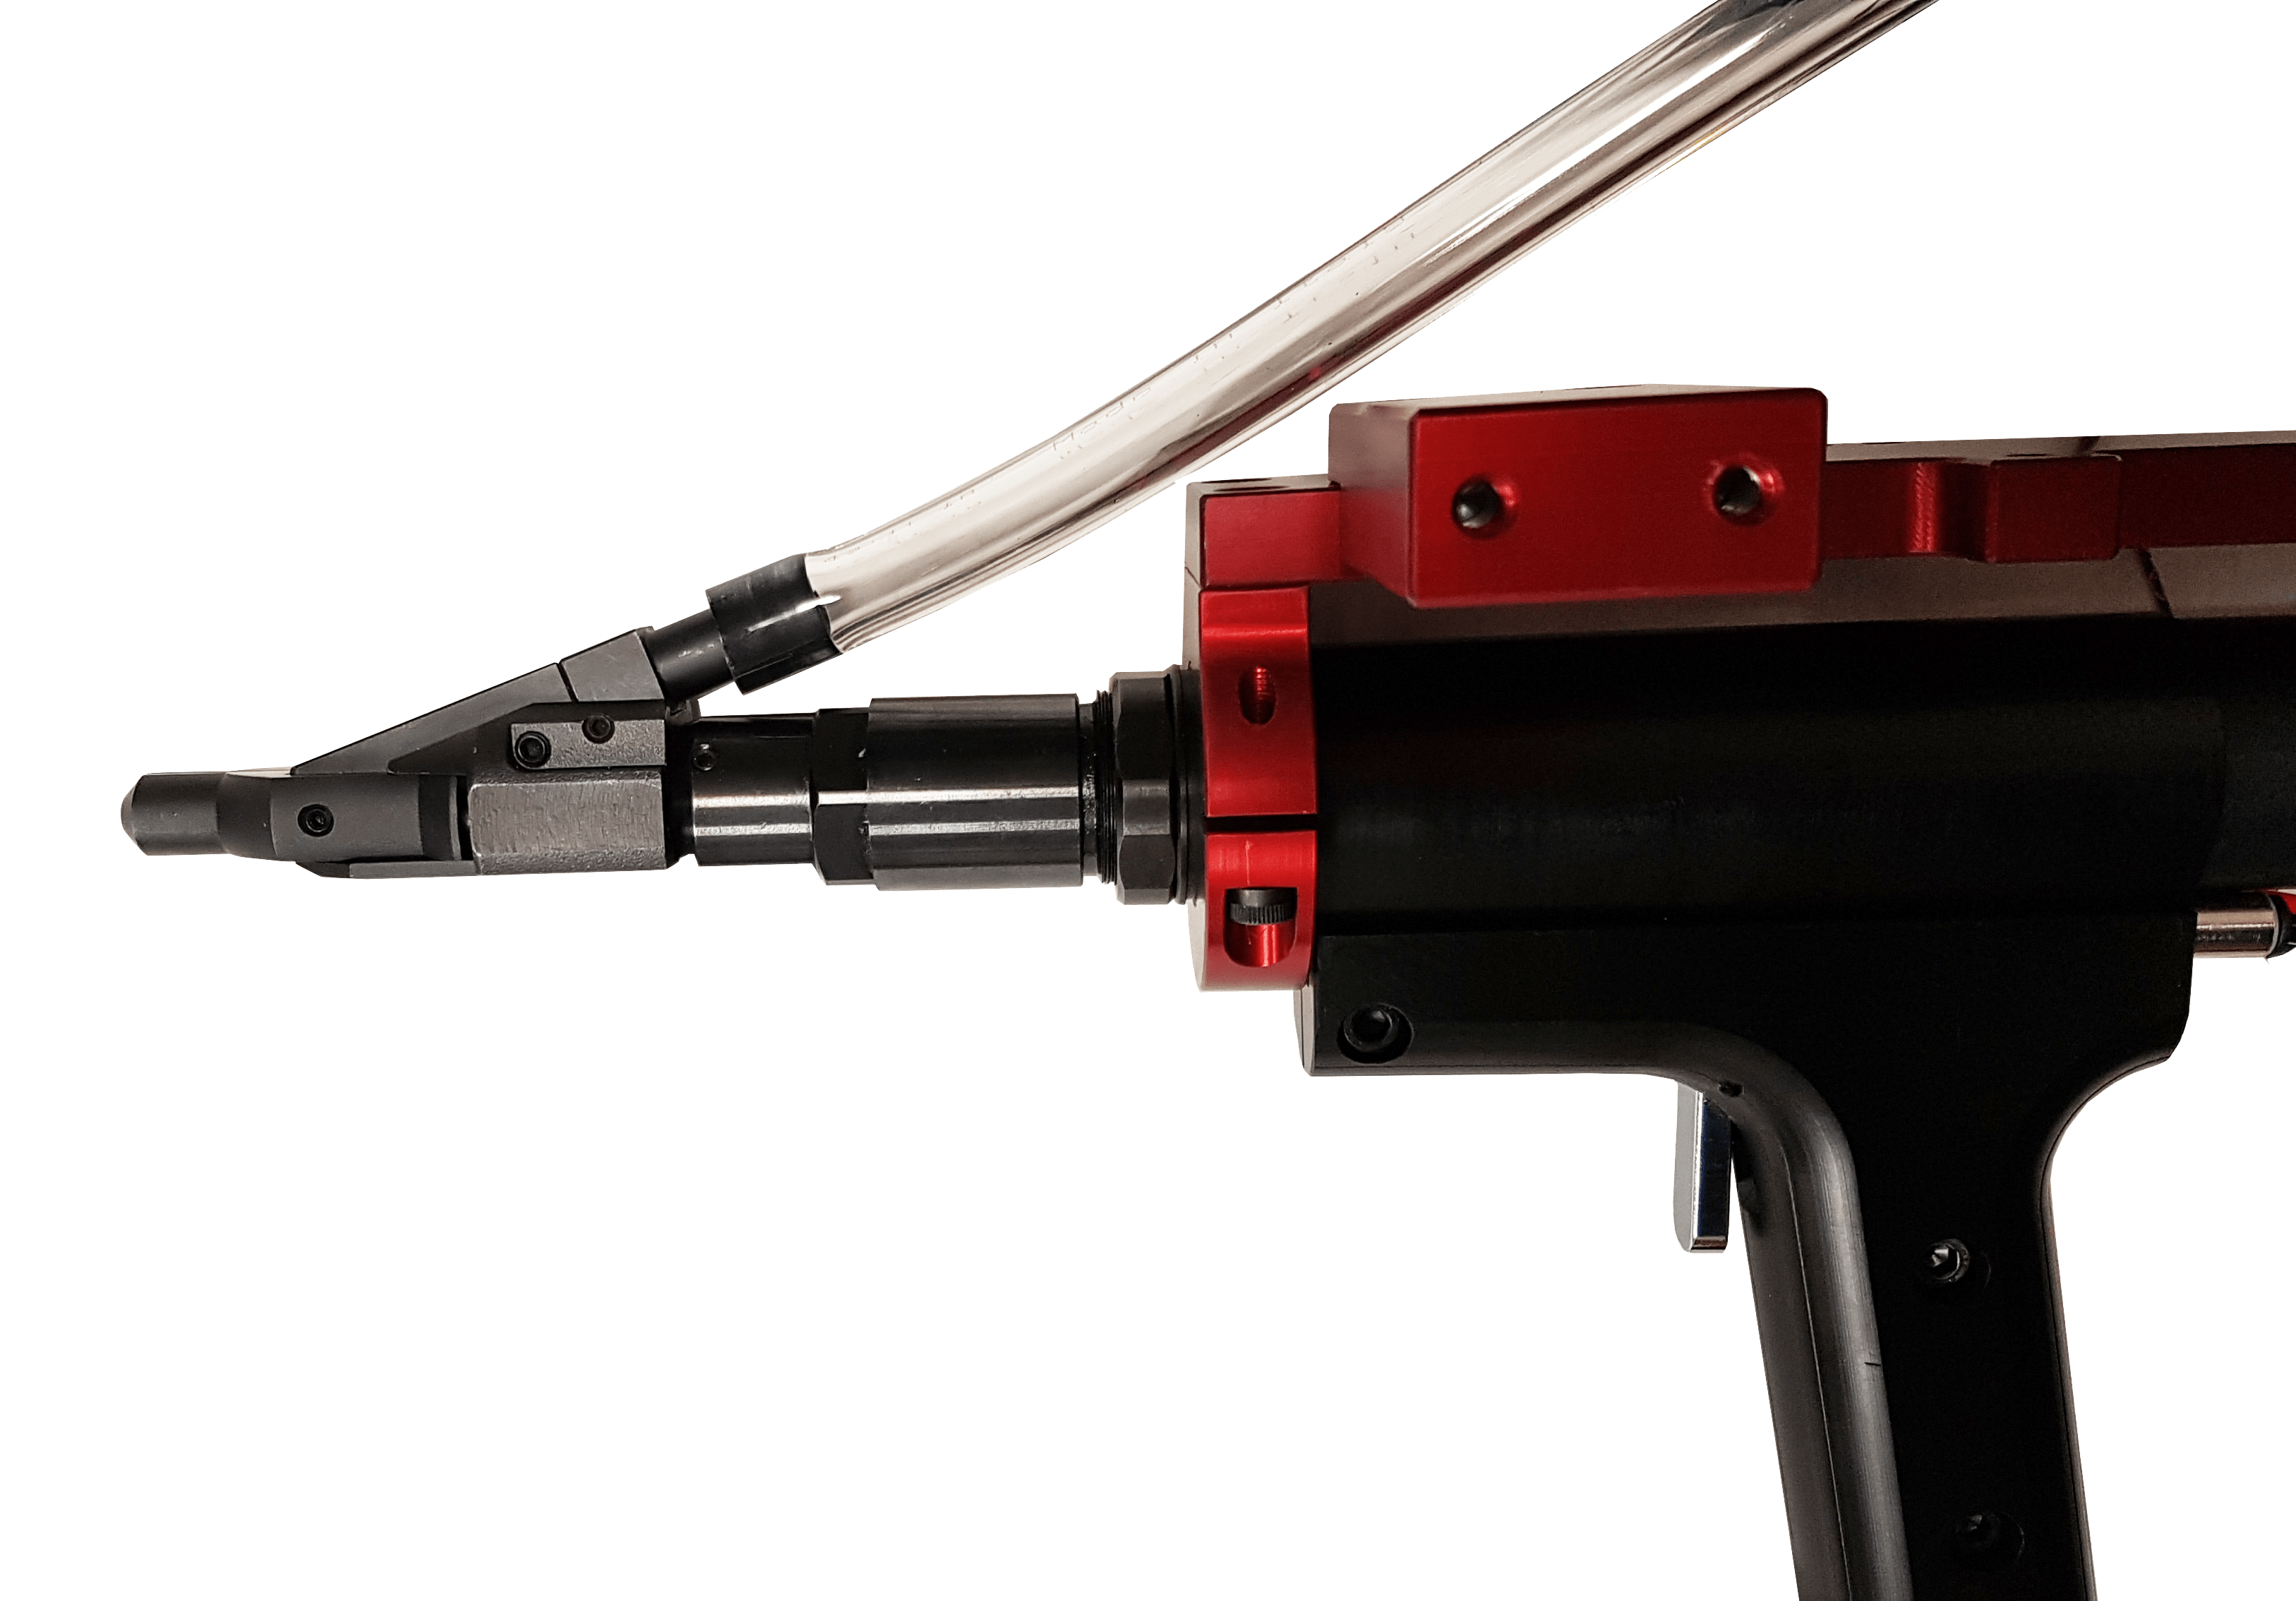 BSF 300 Auto advanced automatic screwfeeding system tool